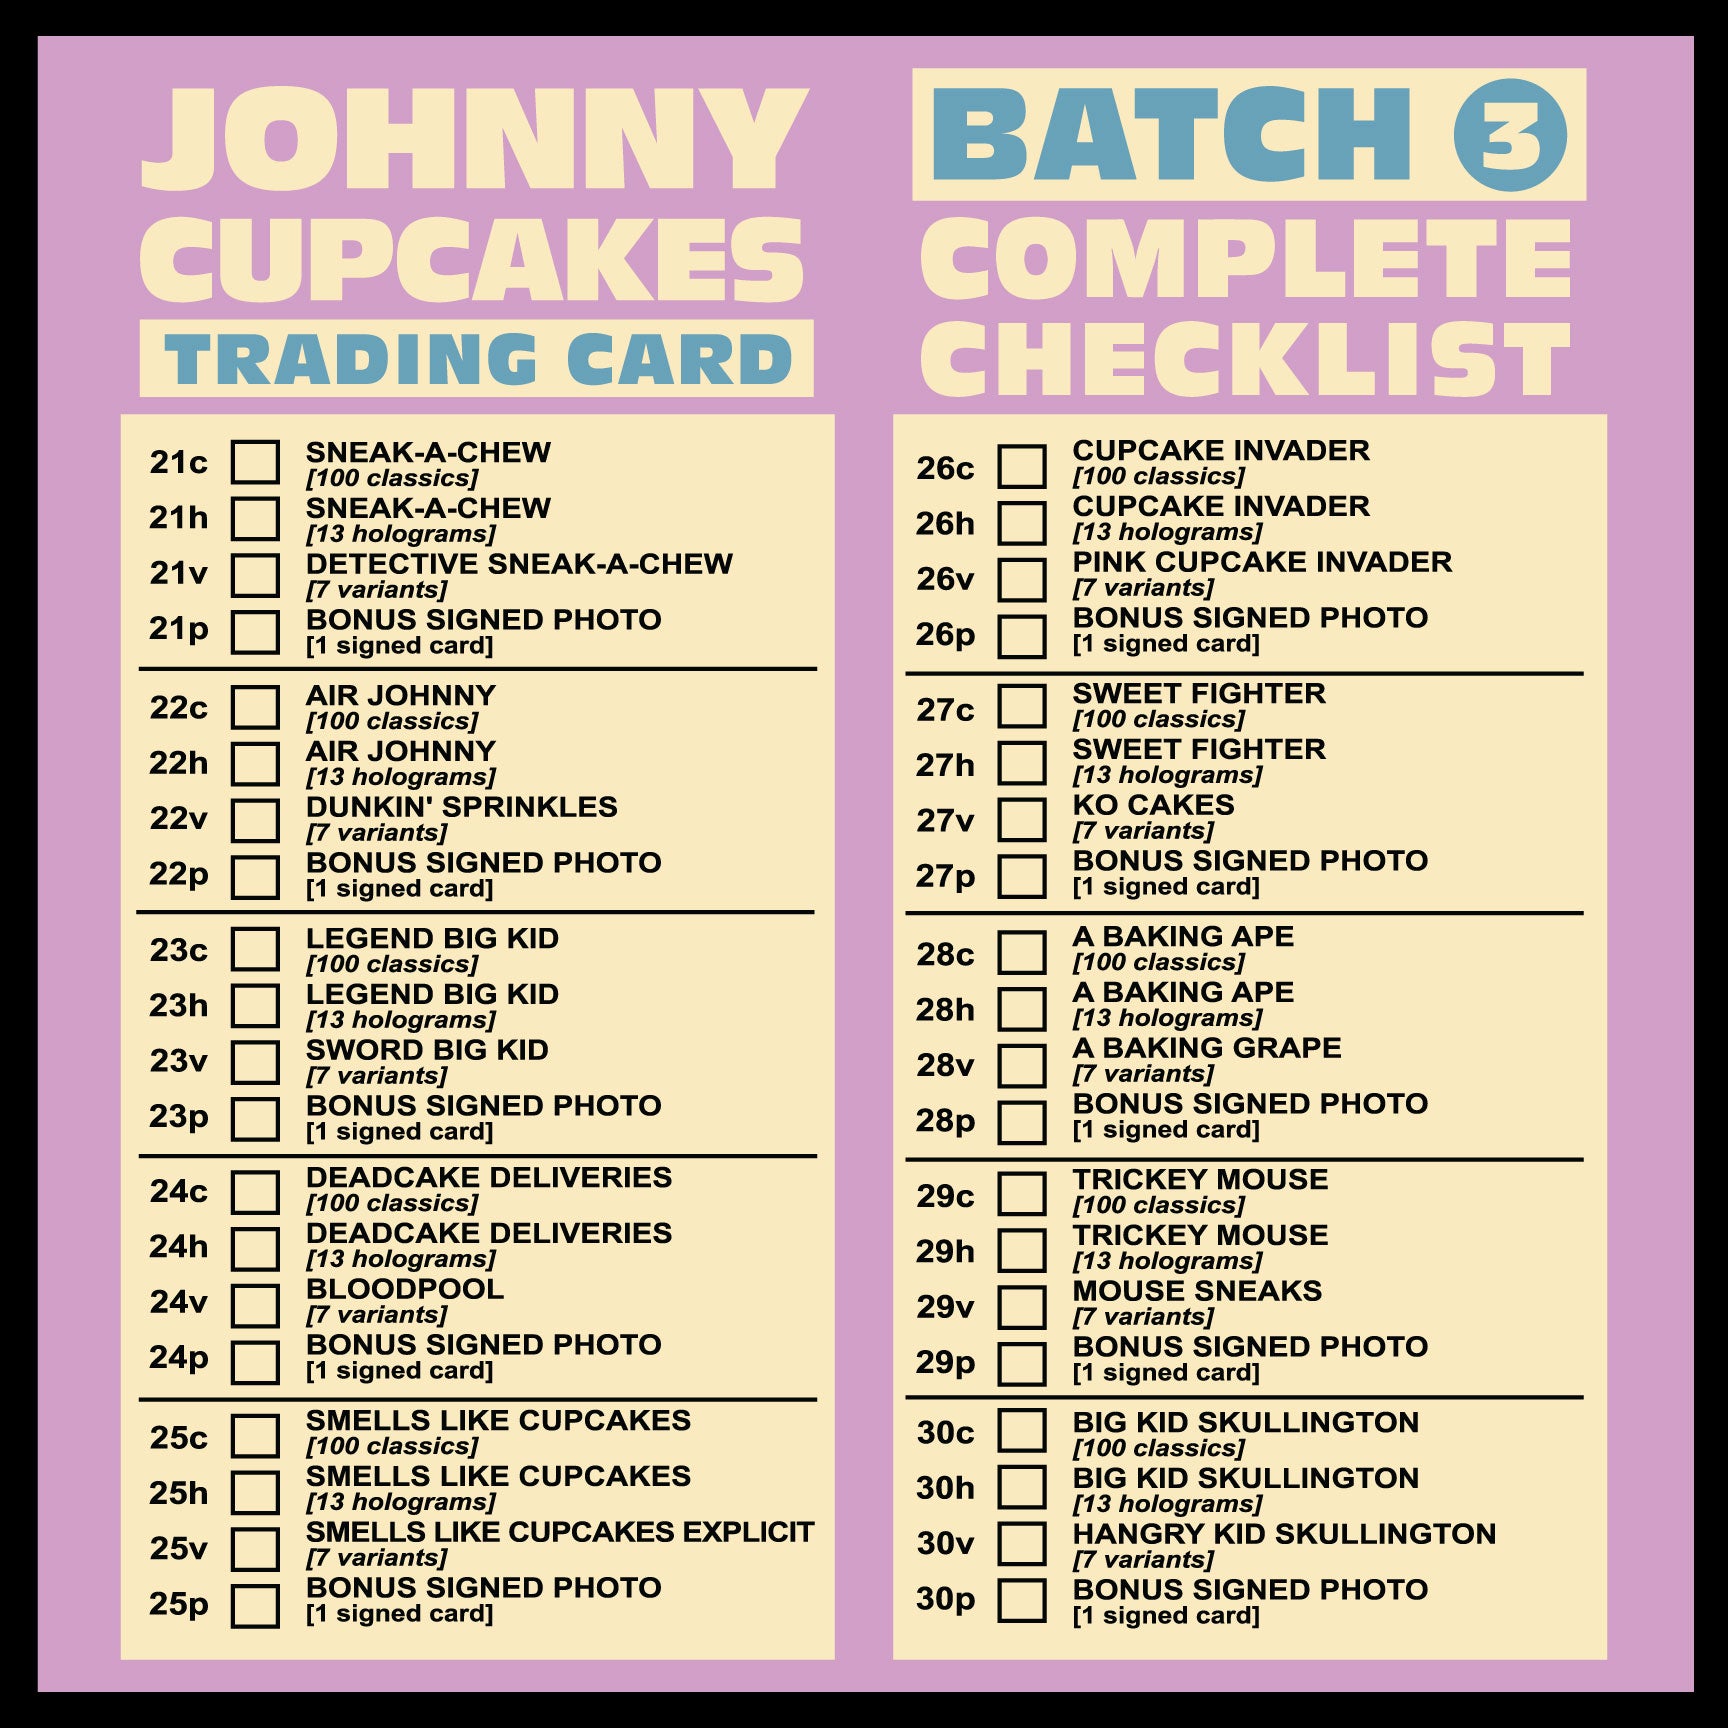 JC Trading Card (Batch 3) - 5 Pack